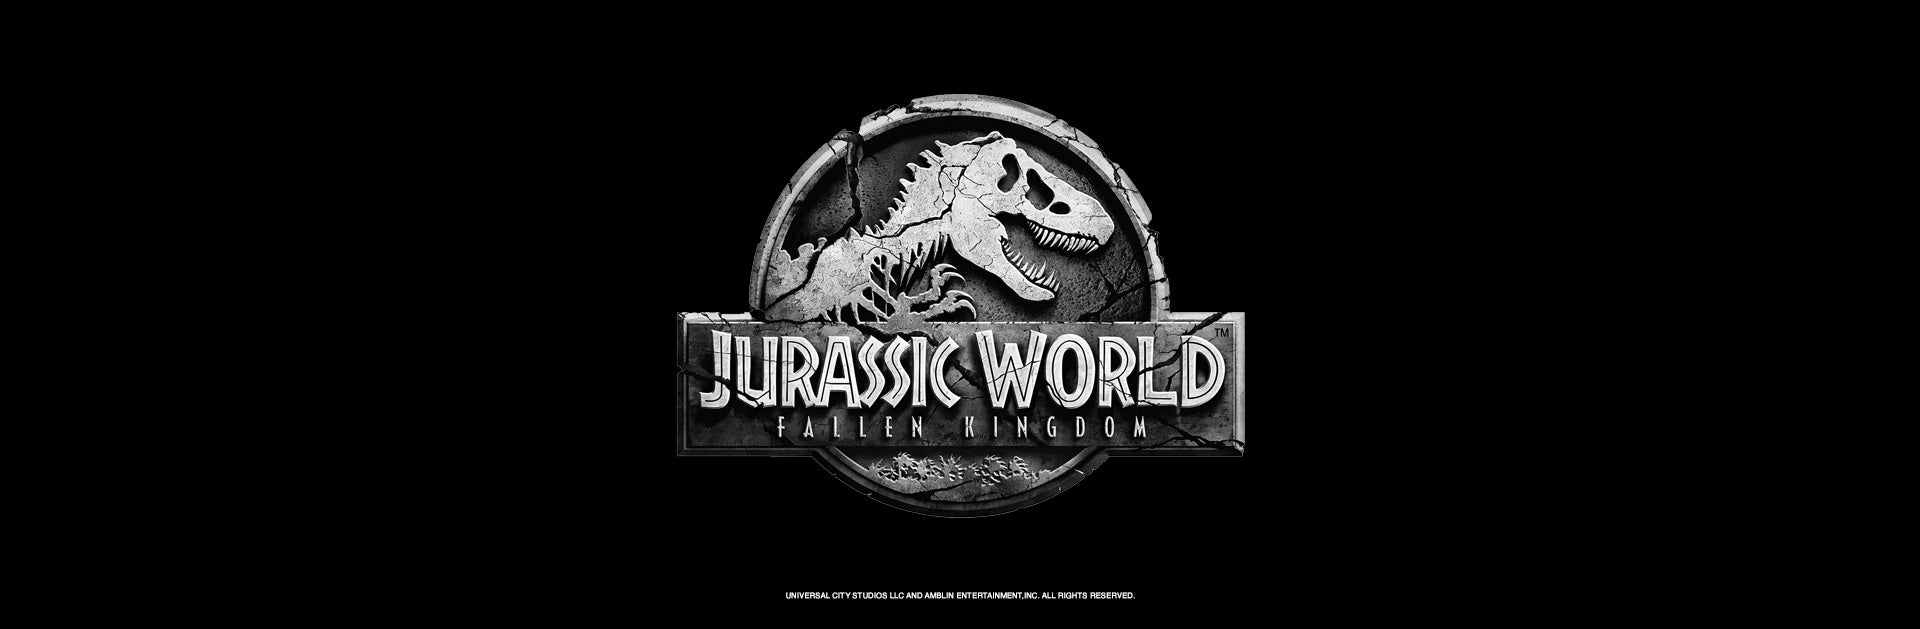 Jurassic World 2 Collection Banner